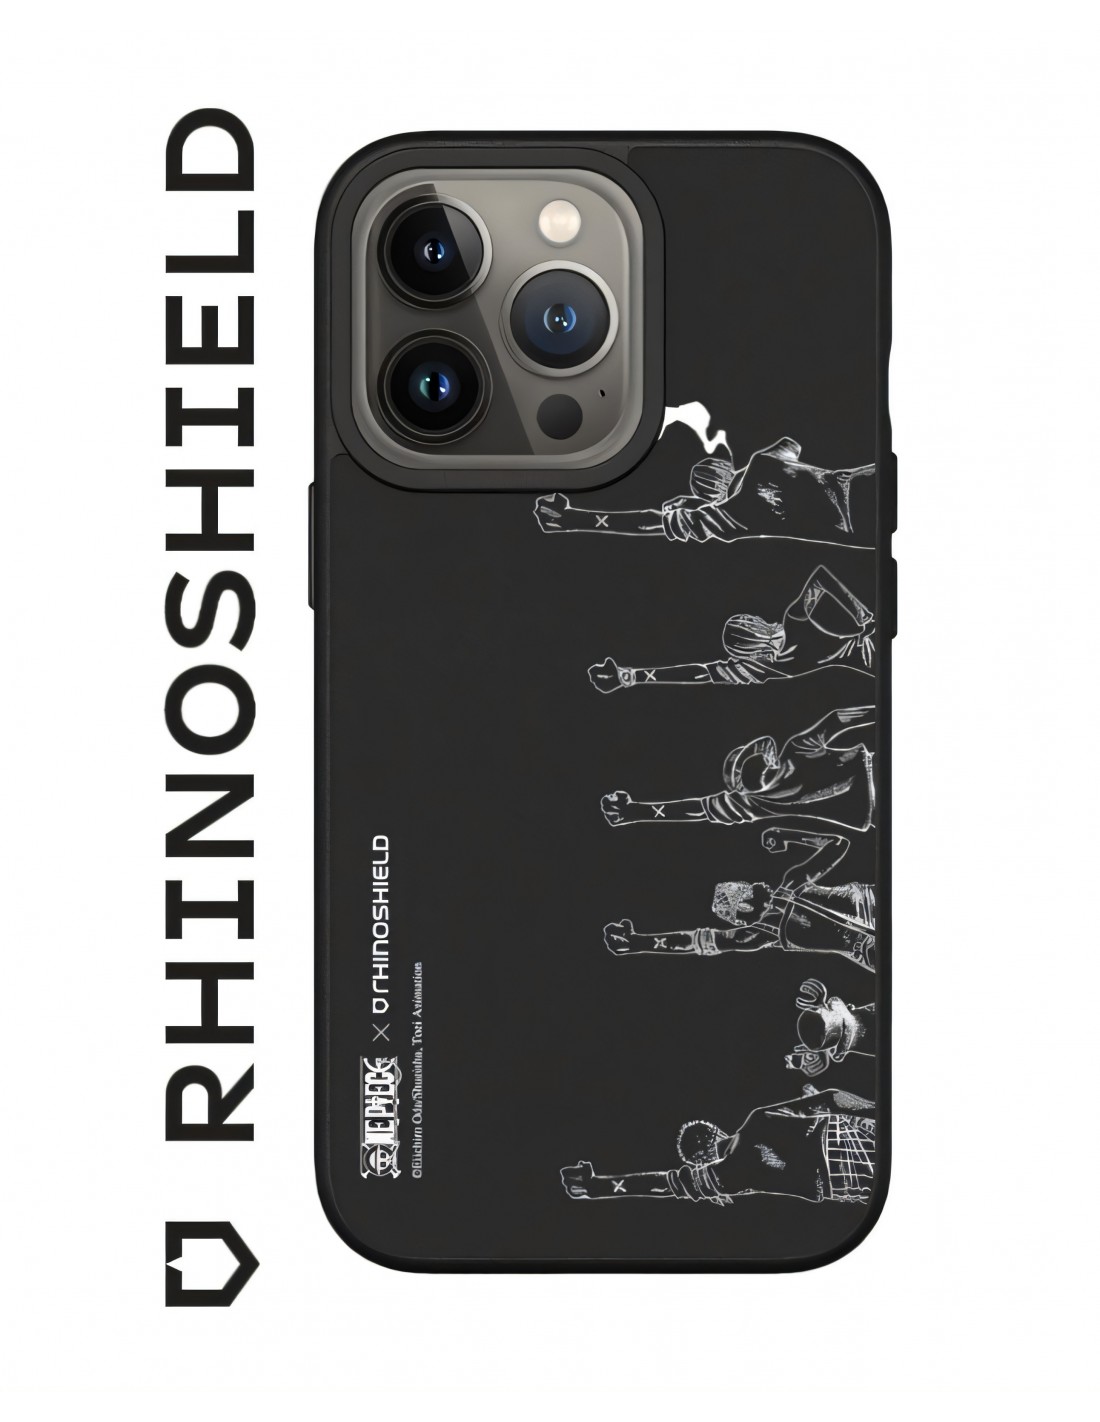 RhinoShield France - La protection ultime pour votre Smartphone –  RHINOSHIELD France